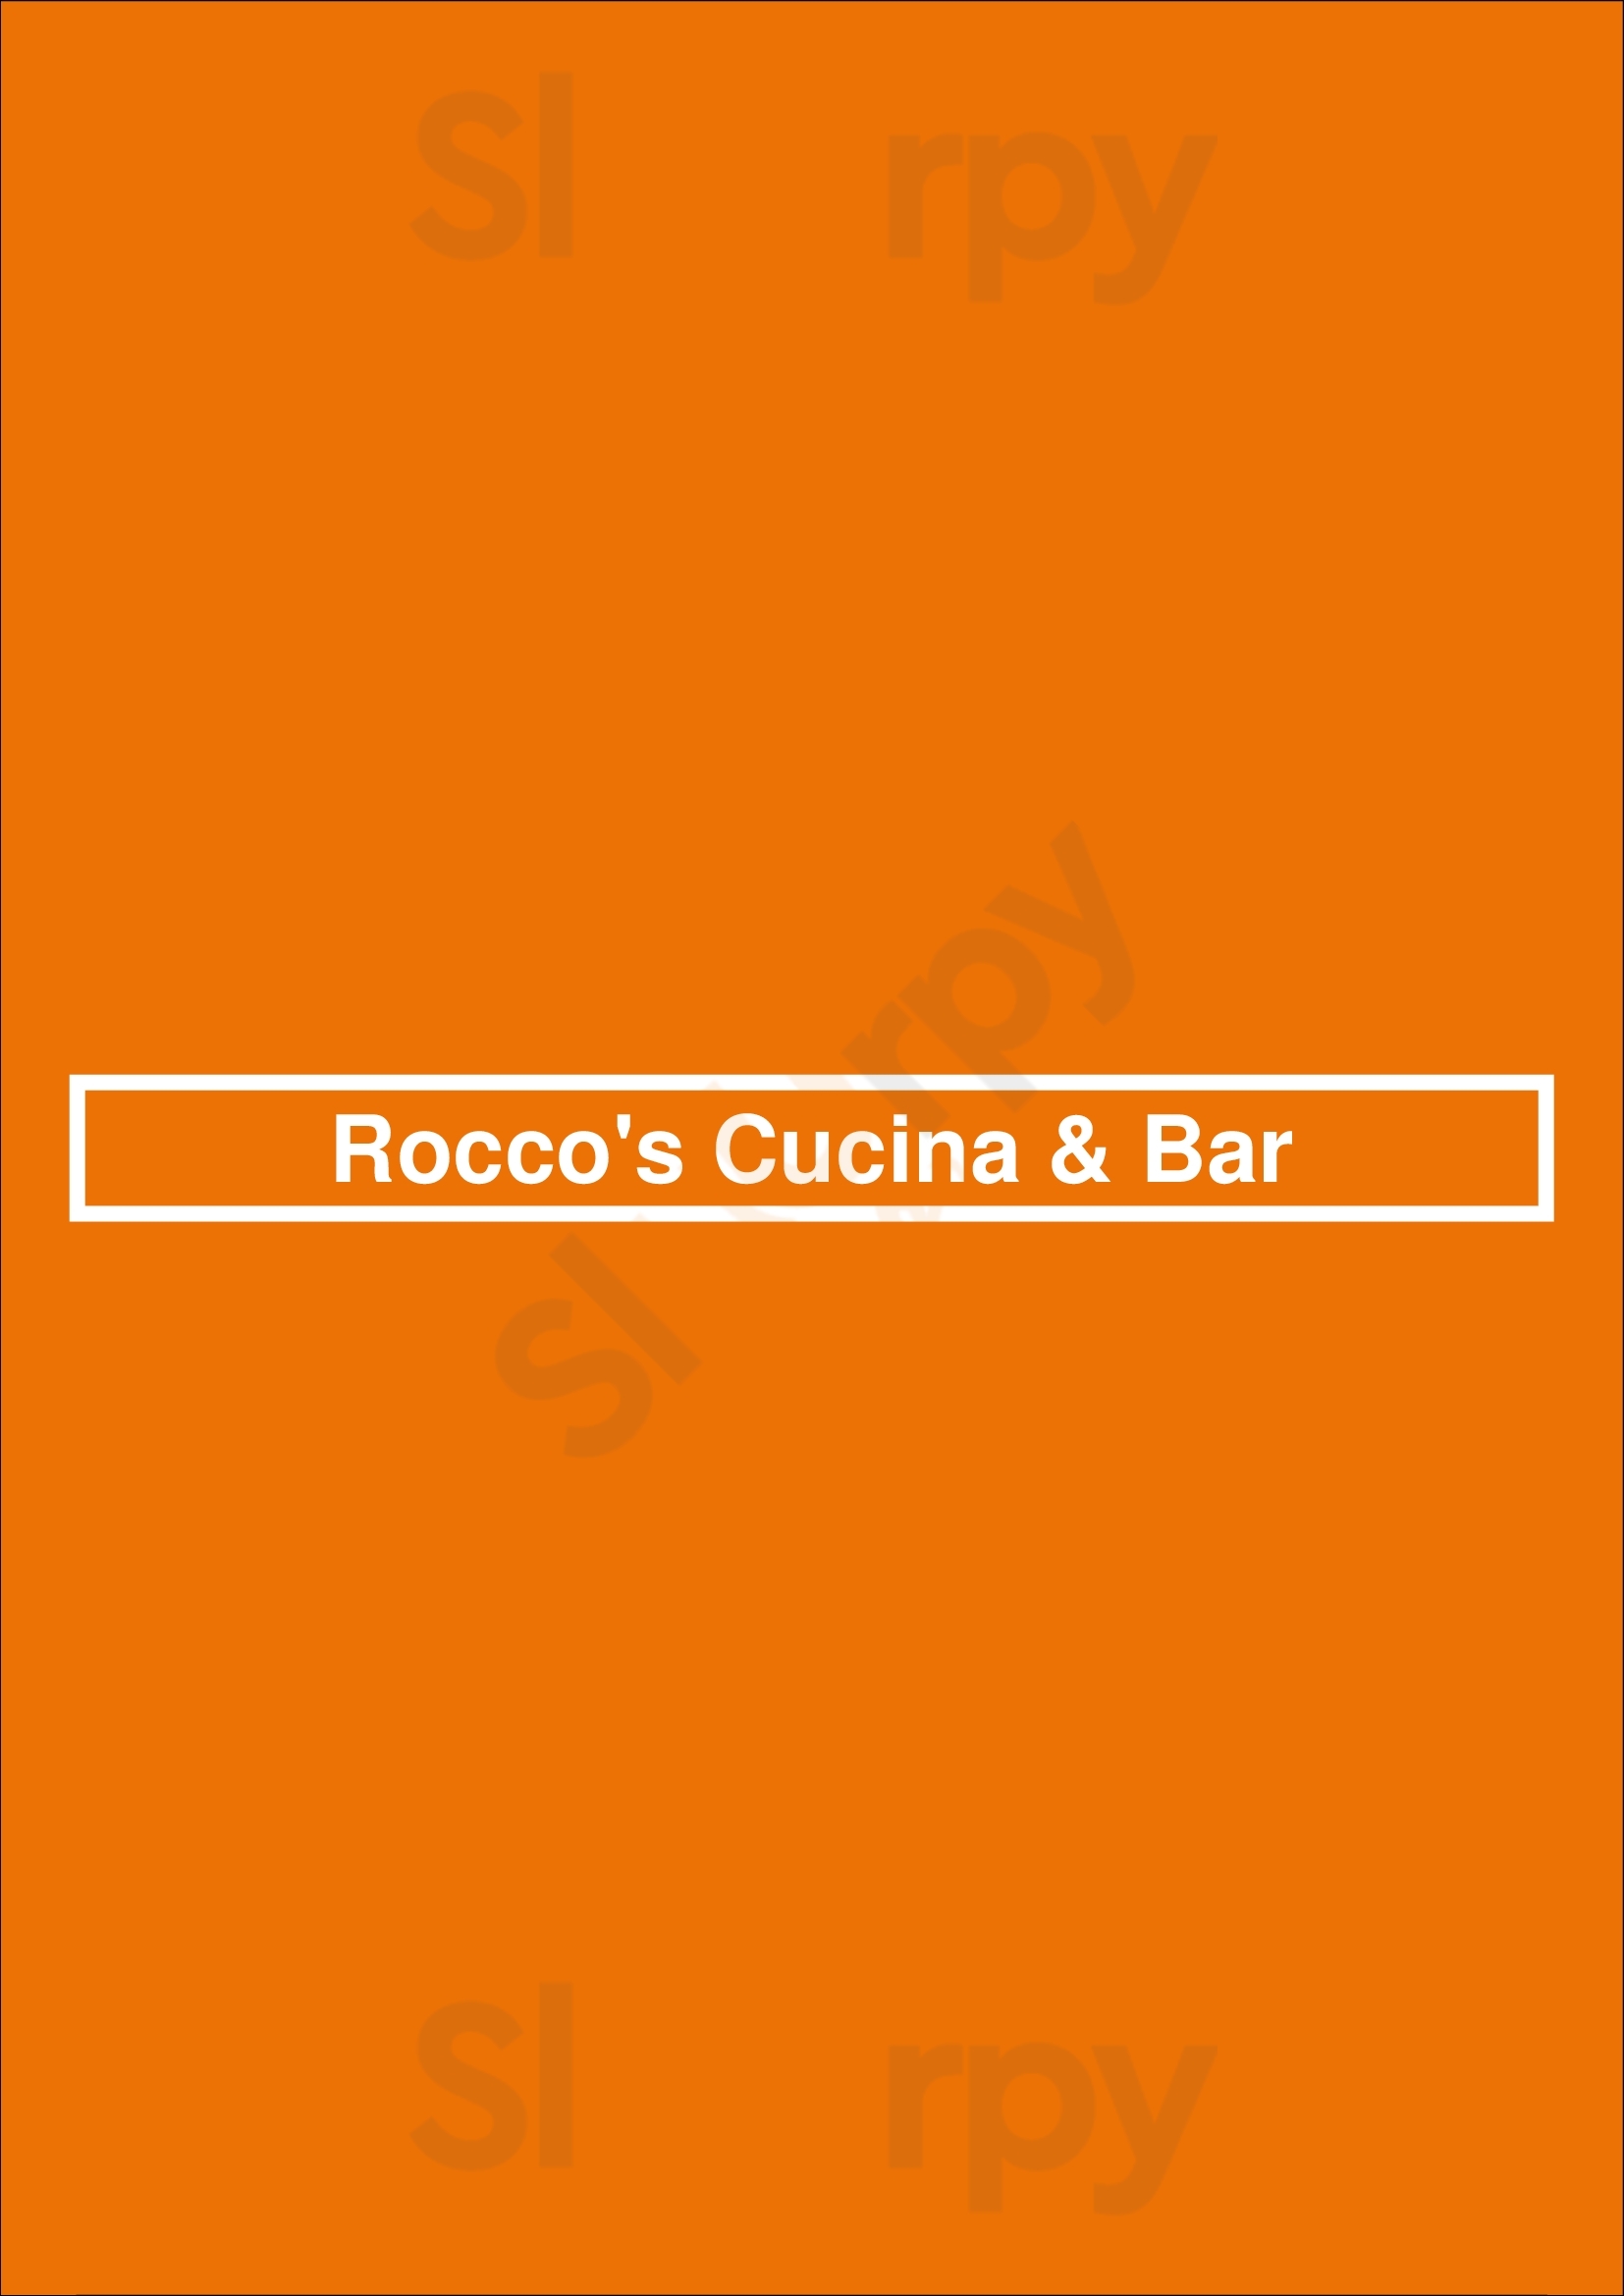 Rocco's Cucina & Bar Boston Menu - 1